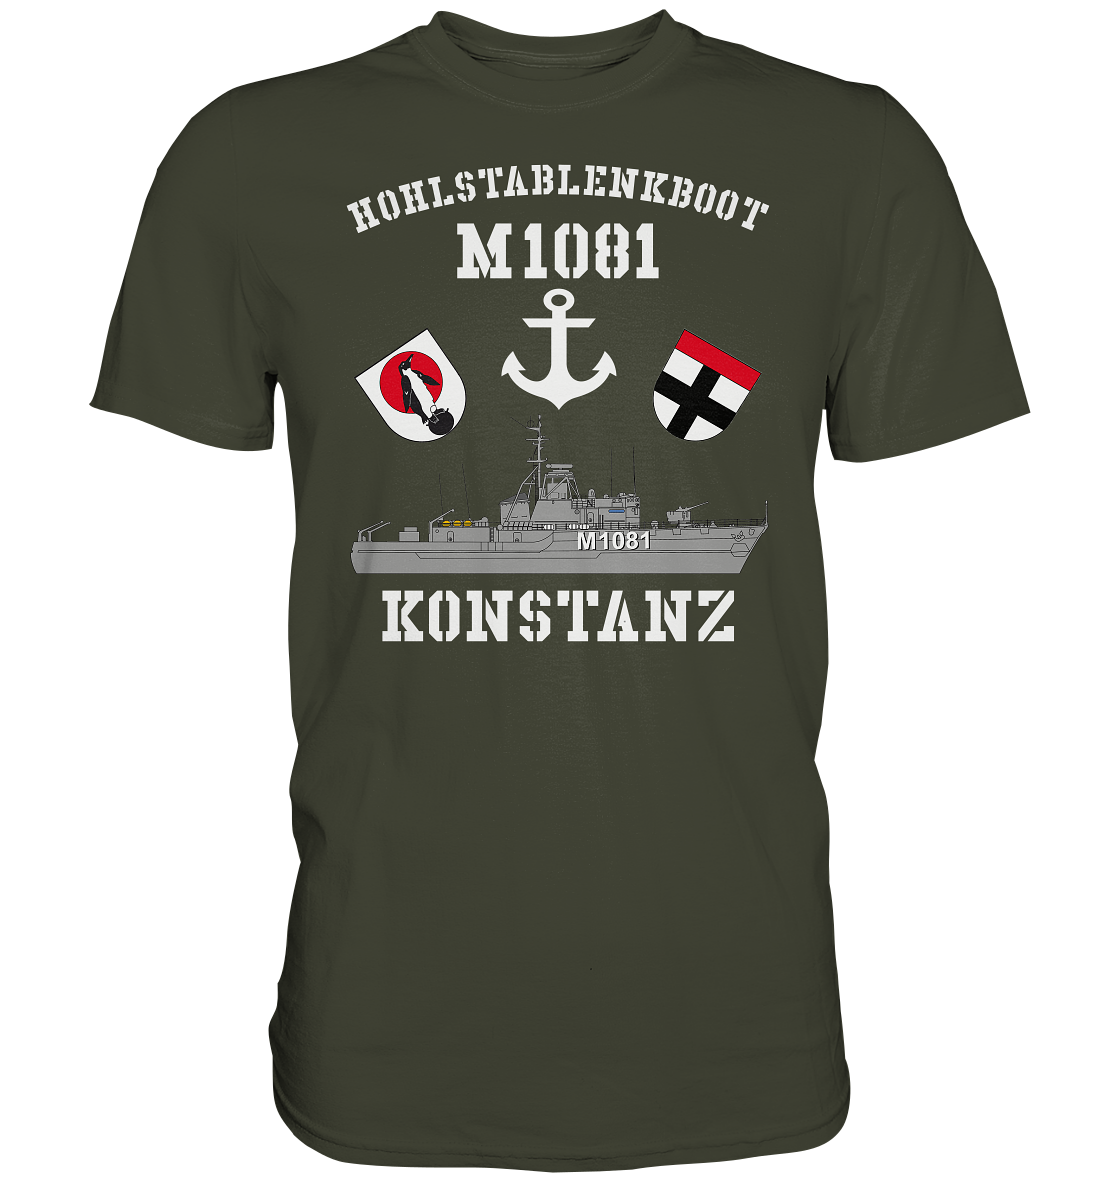 M1081 HL-Boot KONSTANZ - Premium Shirt